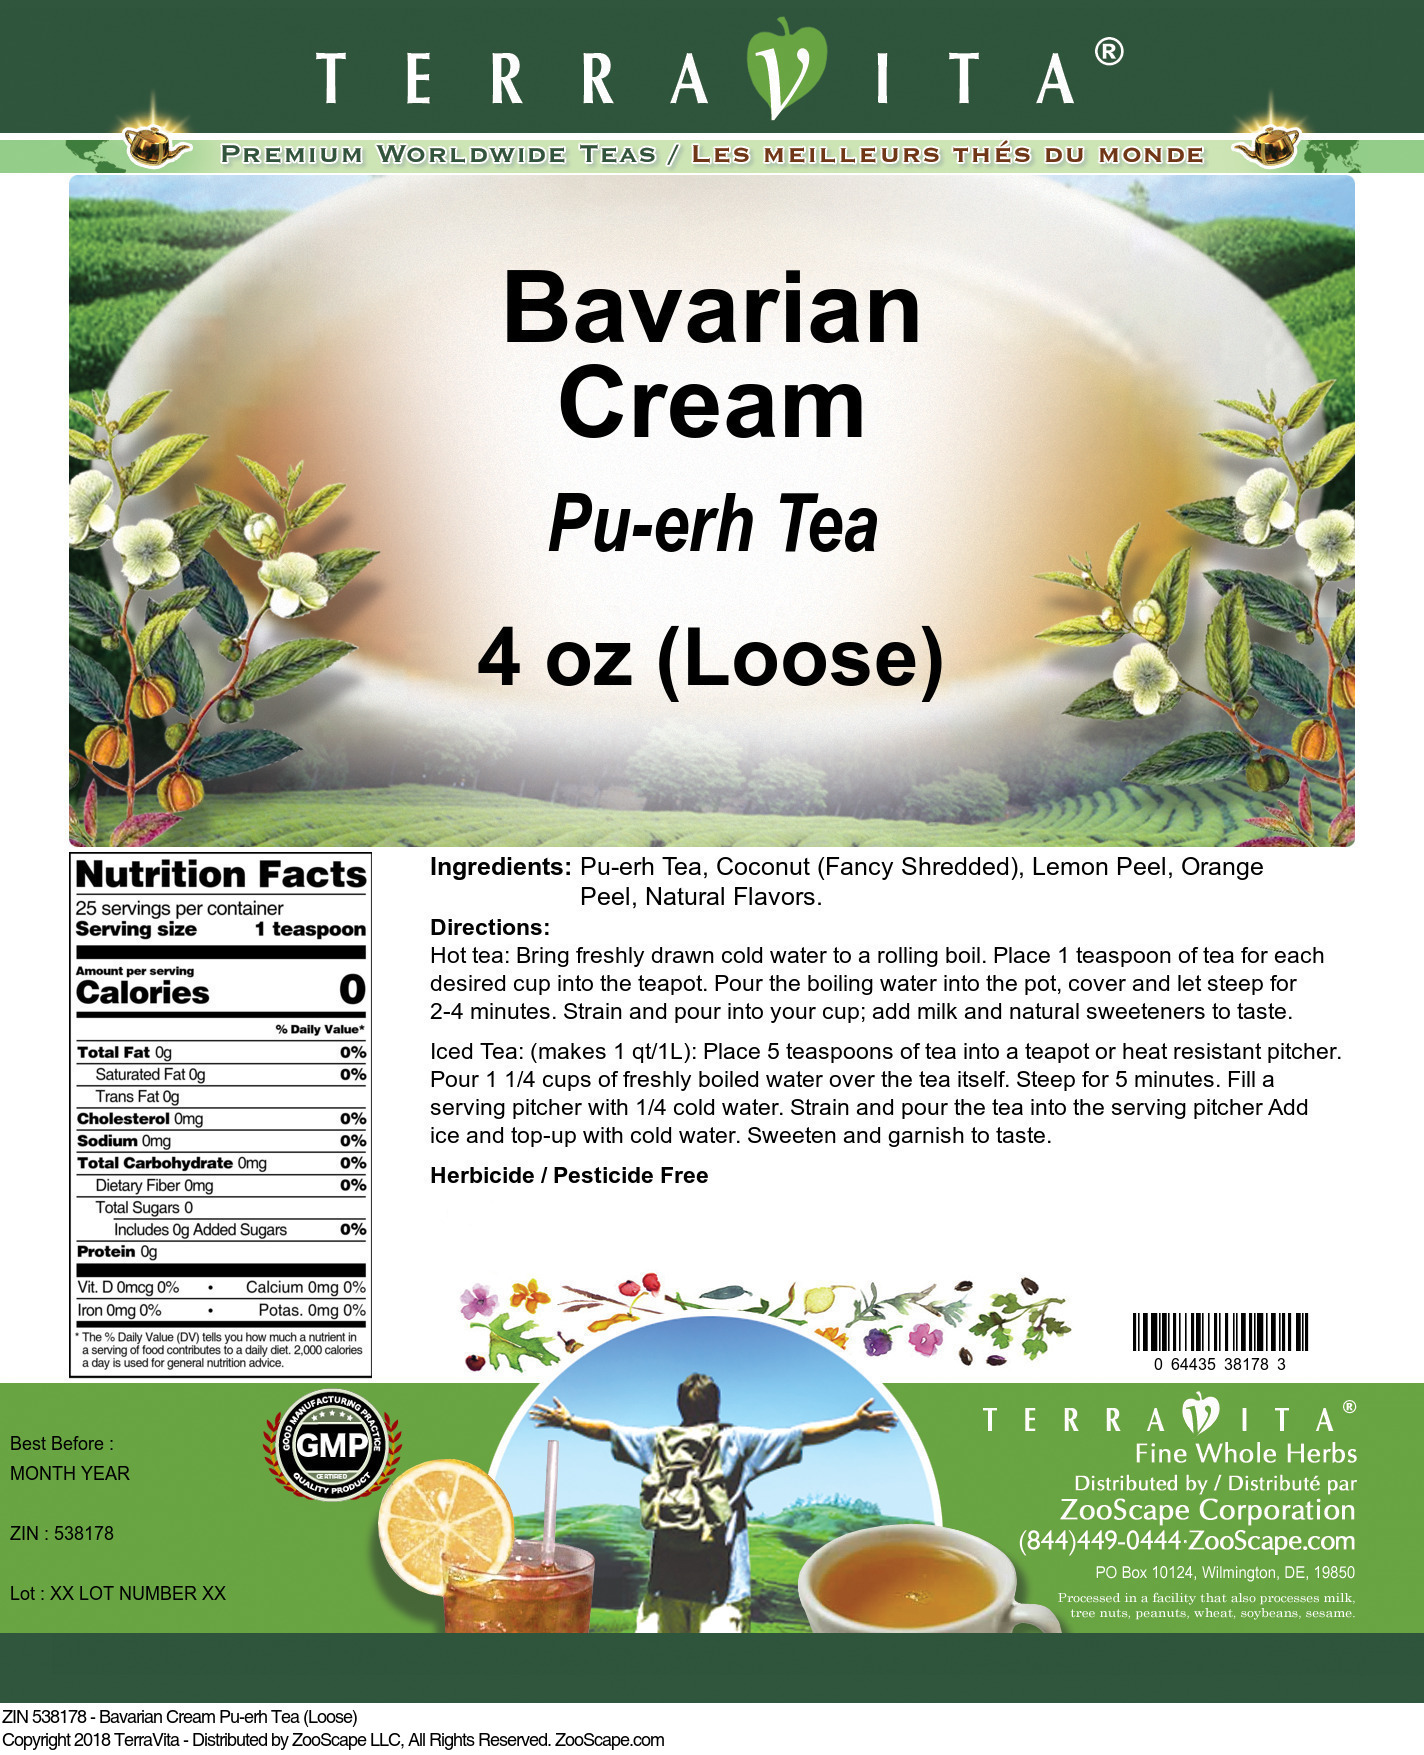 Bavarian Cream Pu-erh Tea (Loose) - Label